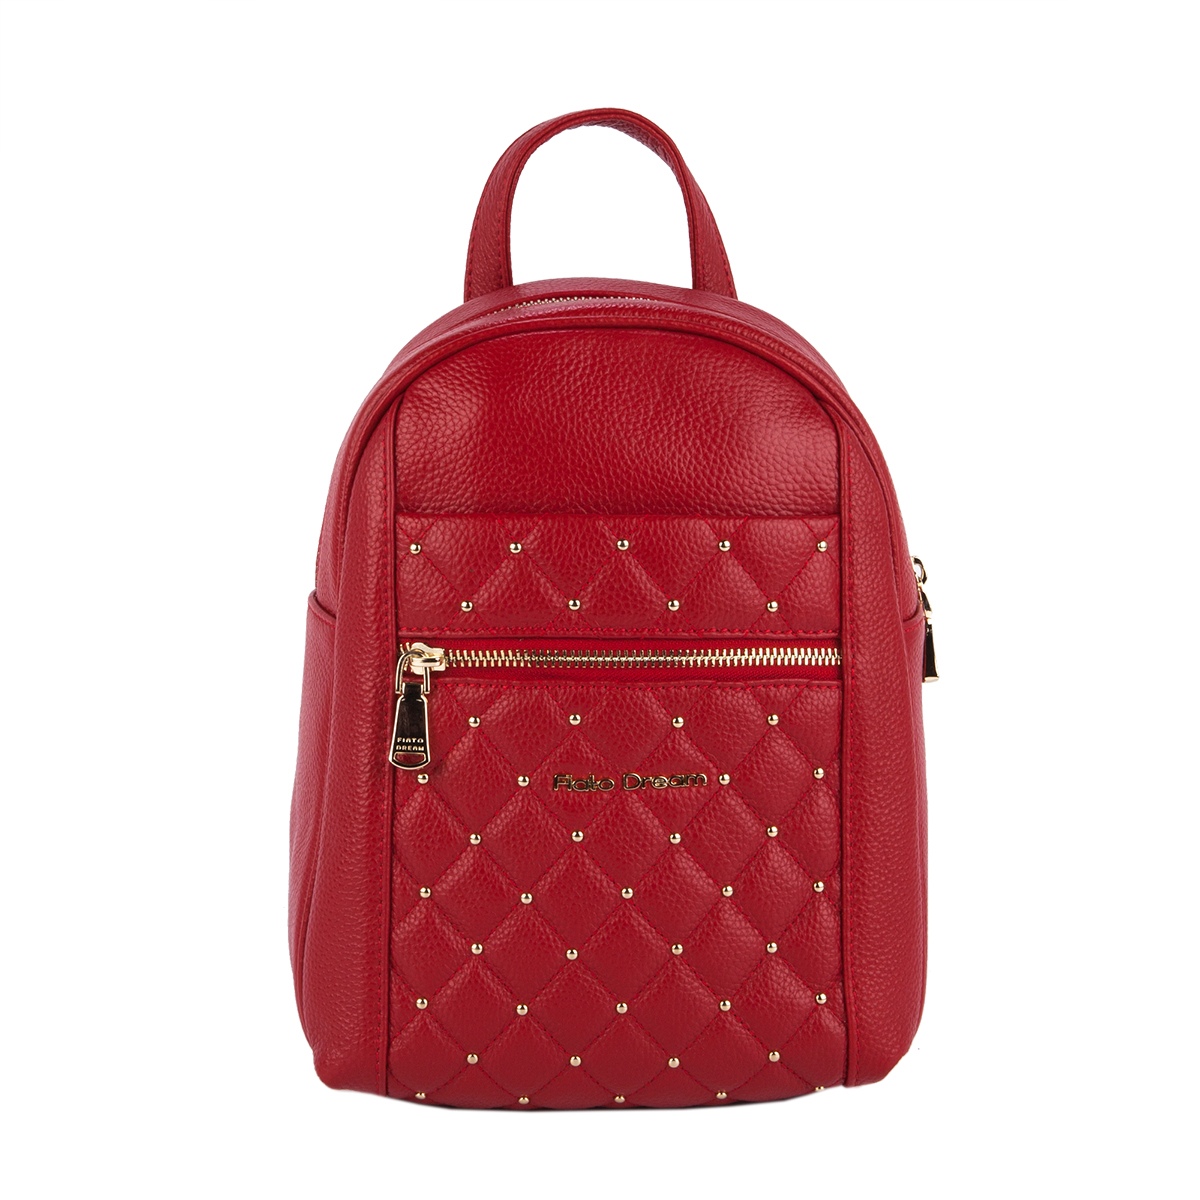 Рюкзак женский Fiato Dream 5213 красный, 27х22х14 см